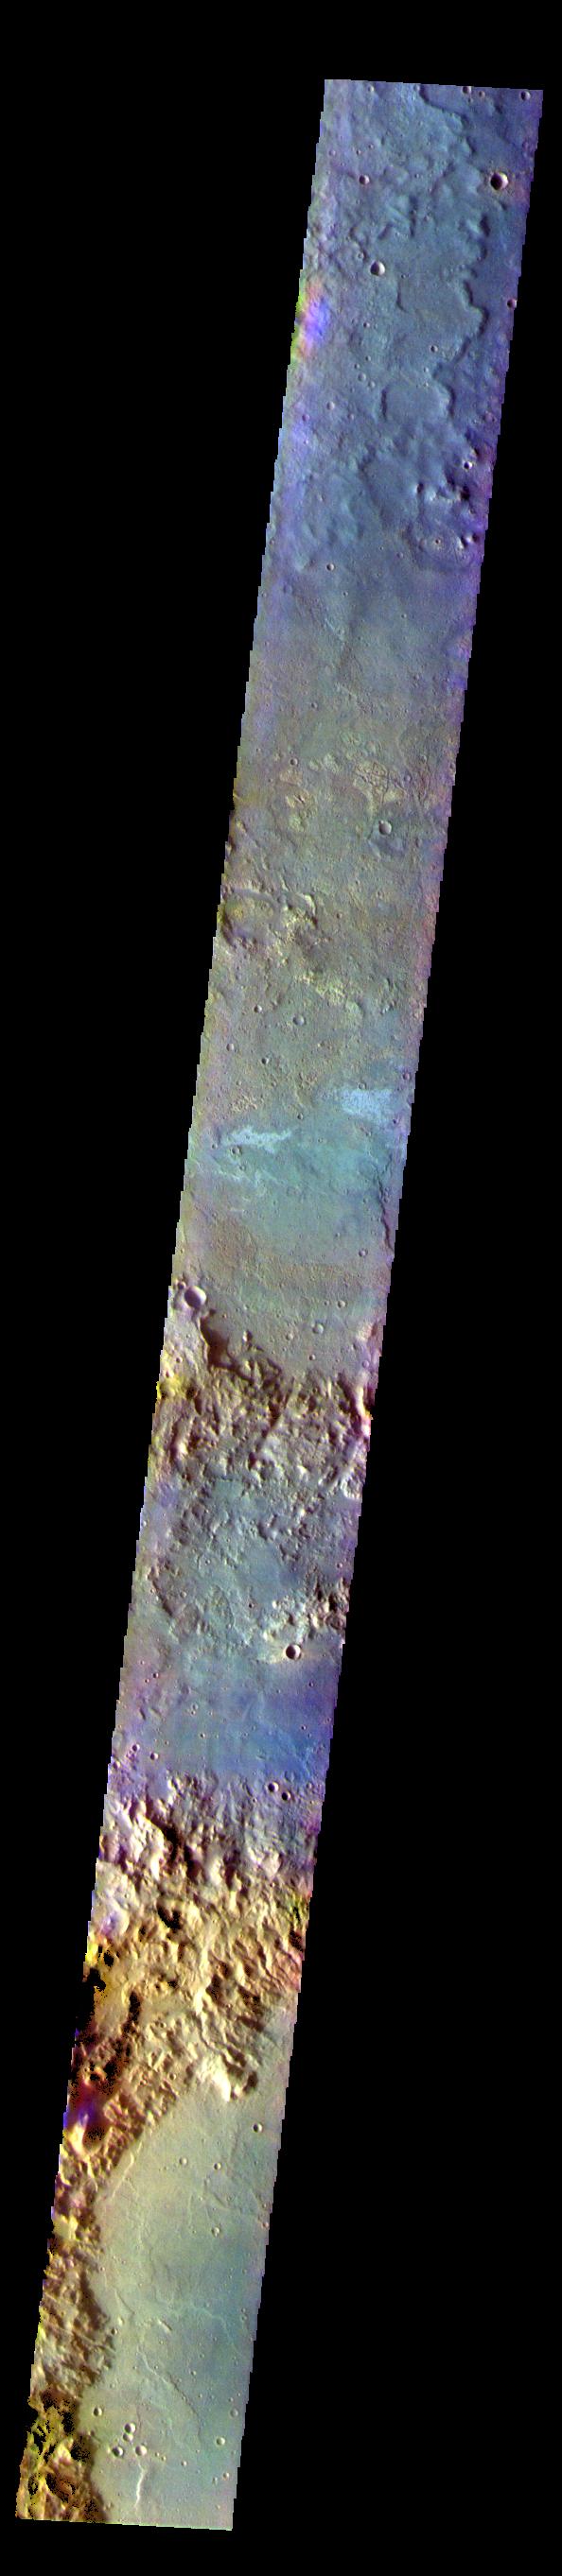 PIA24999: Terra Cimmeria - False Color